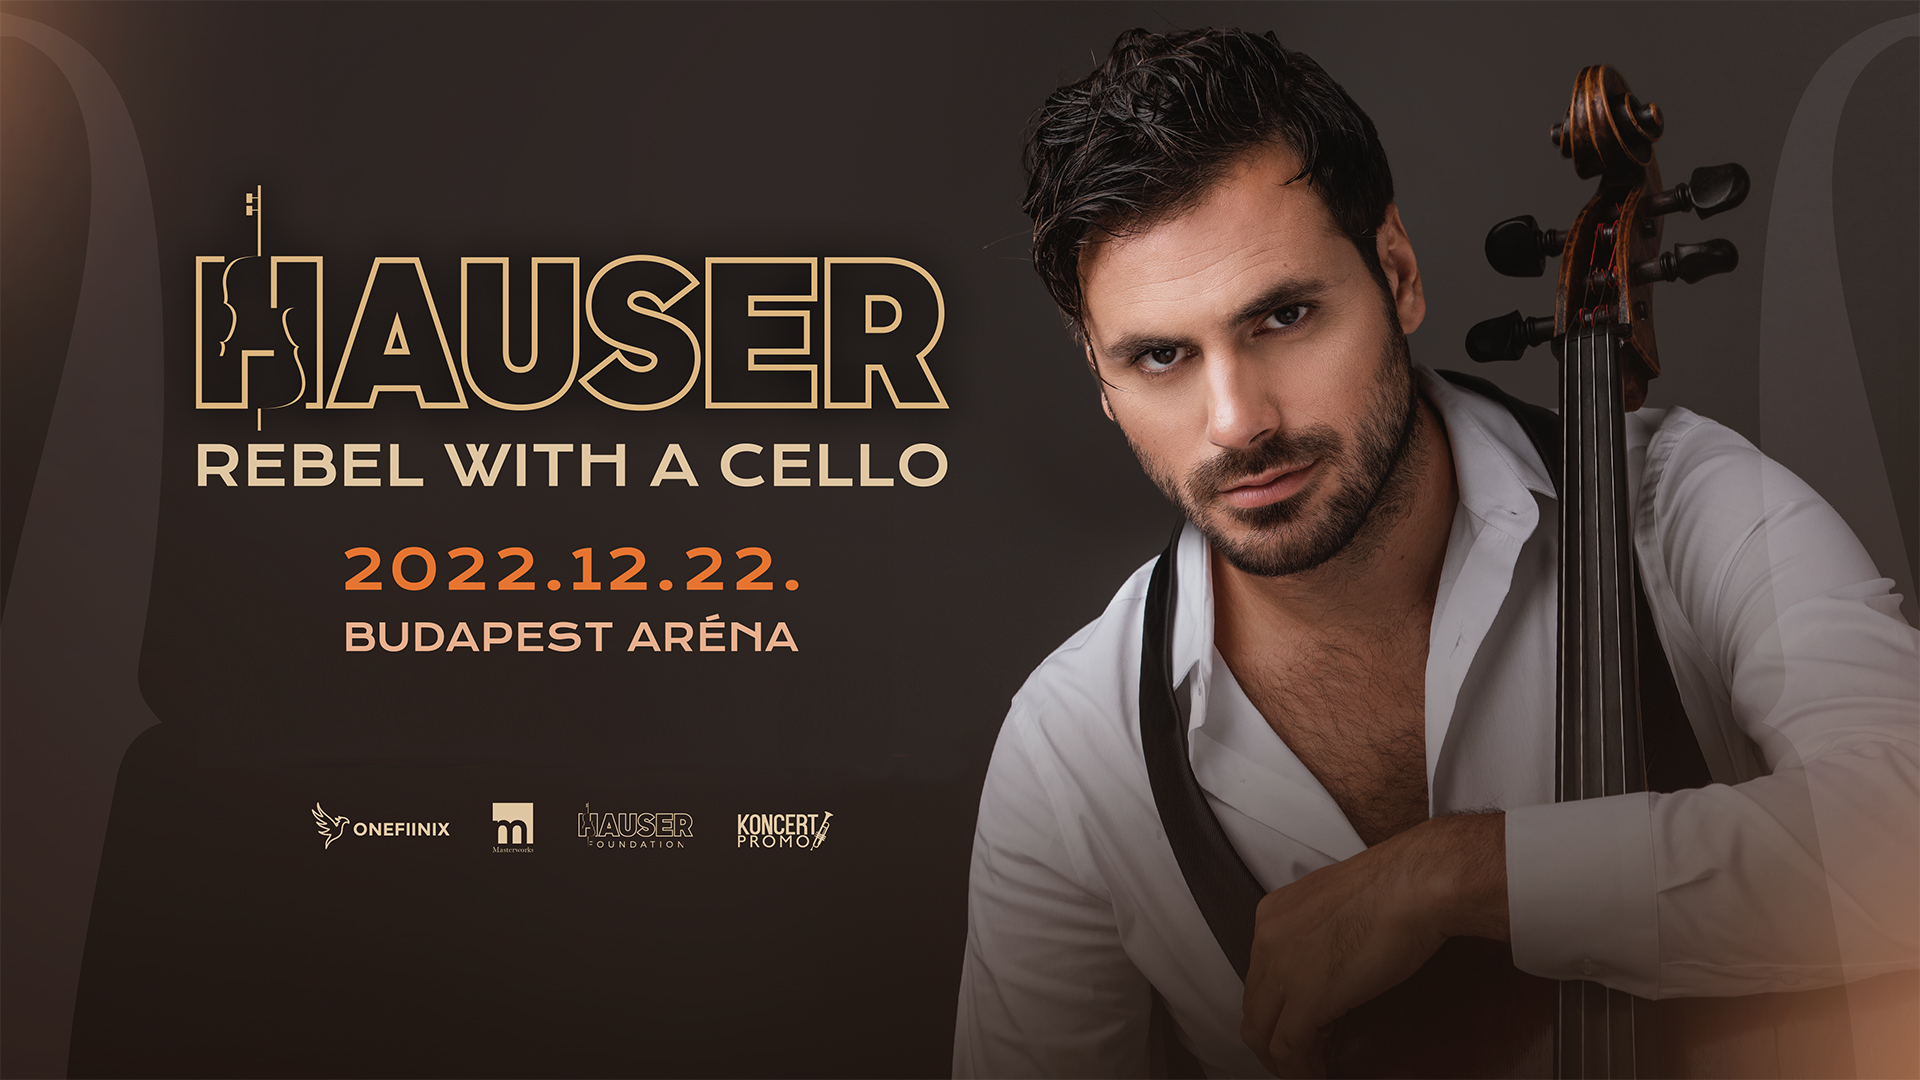 Hauser koncert 2022 - Rebel with a cello tour